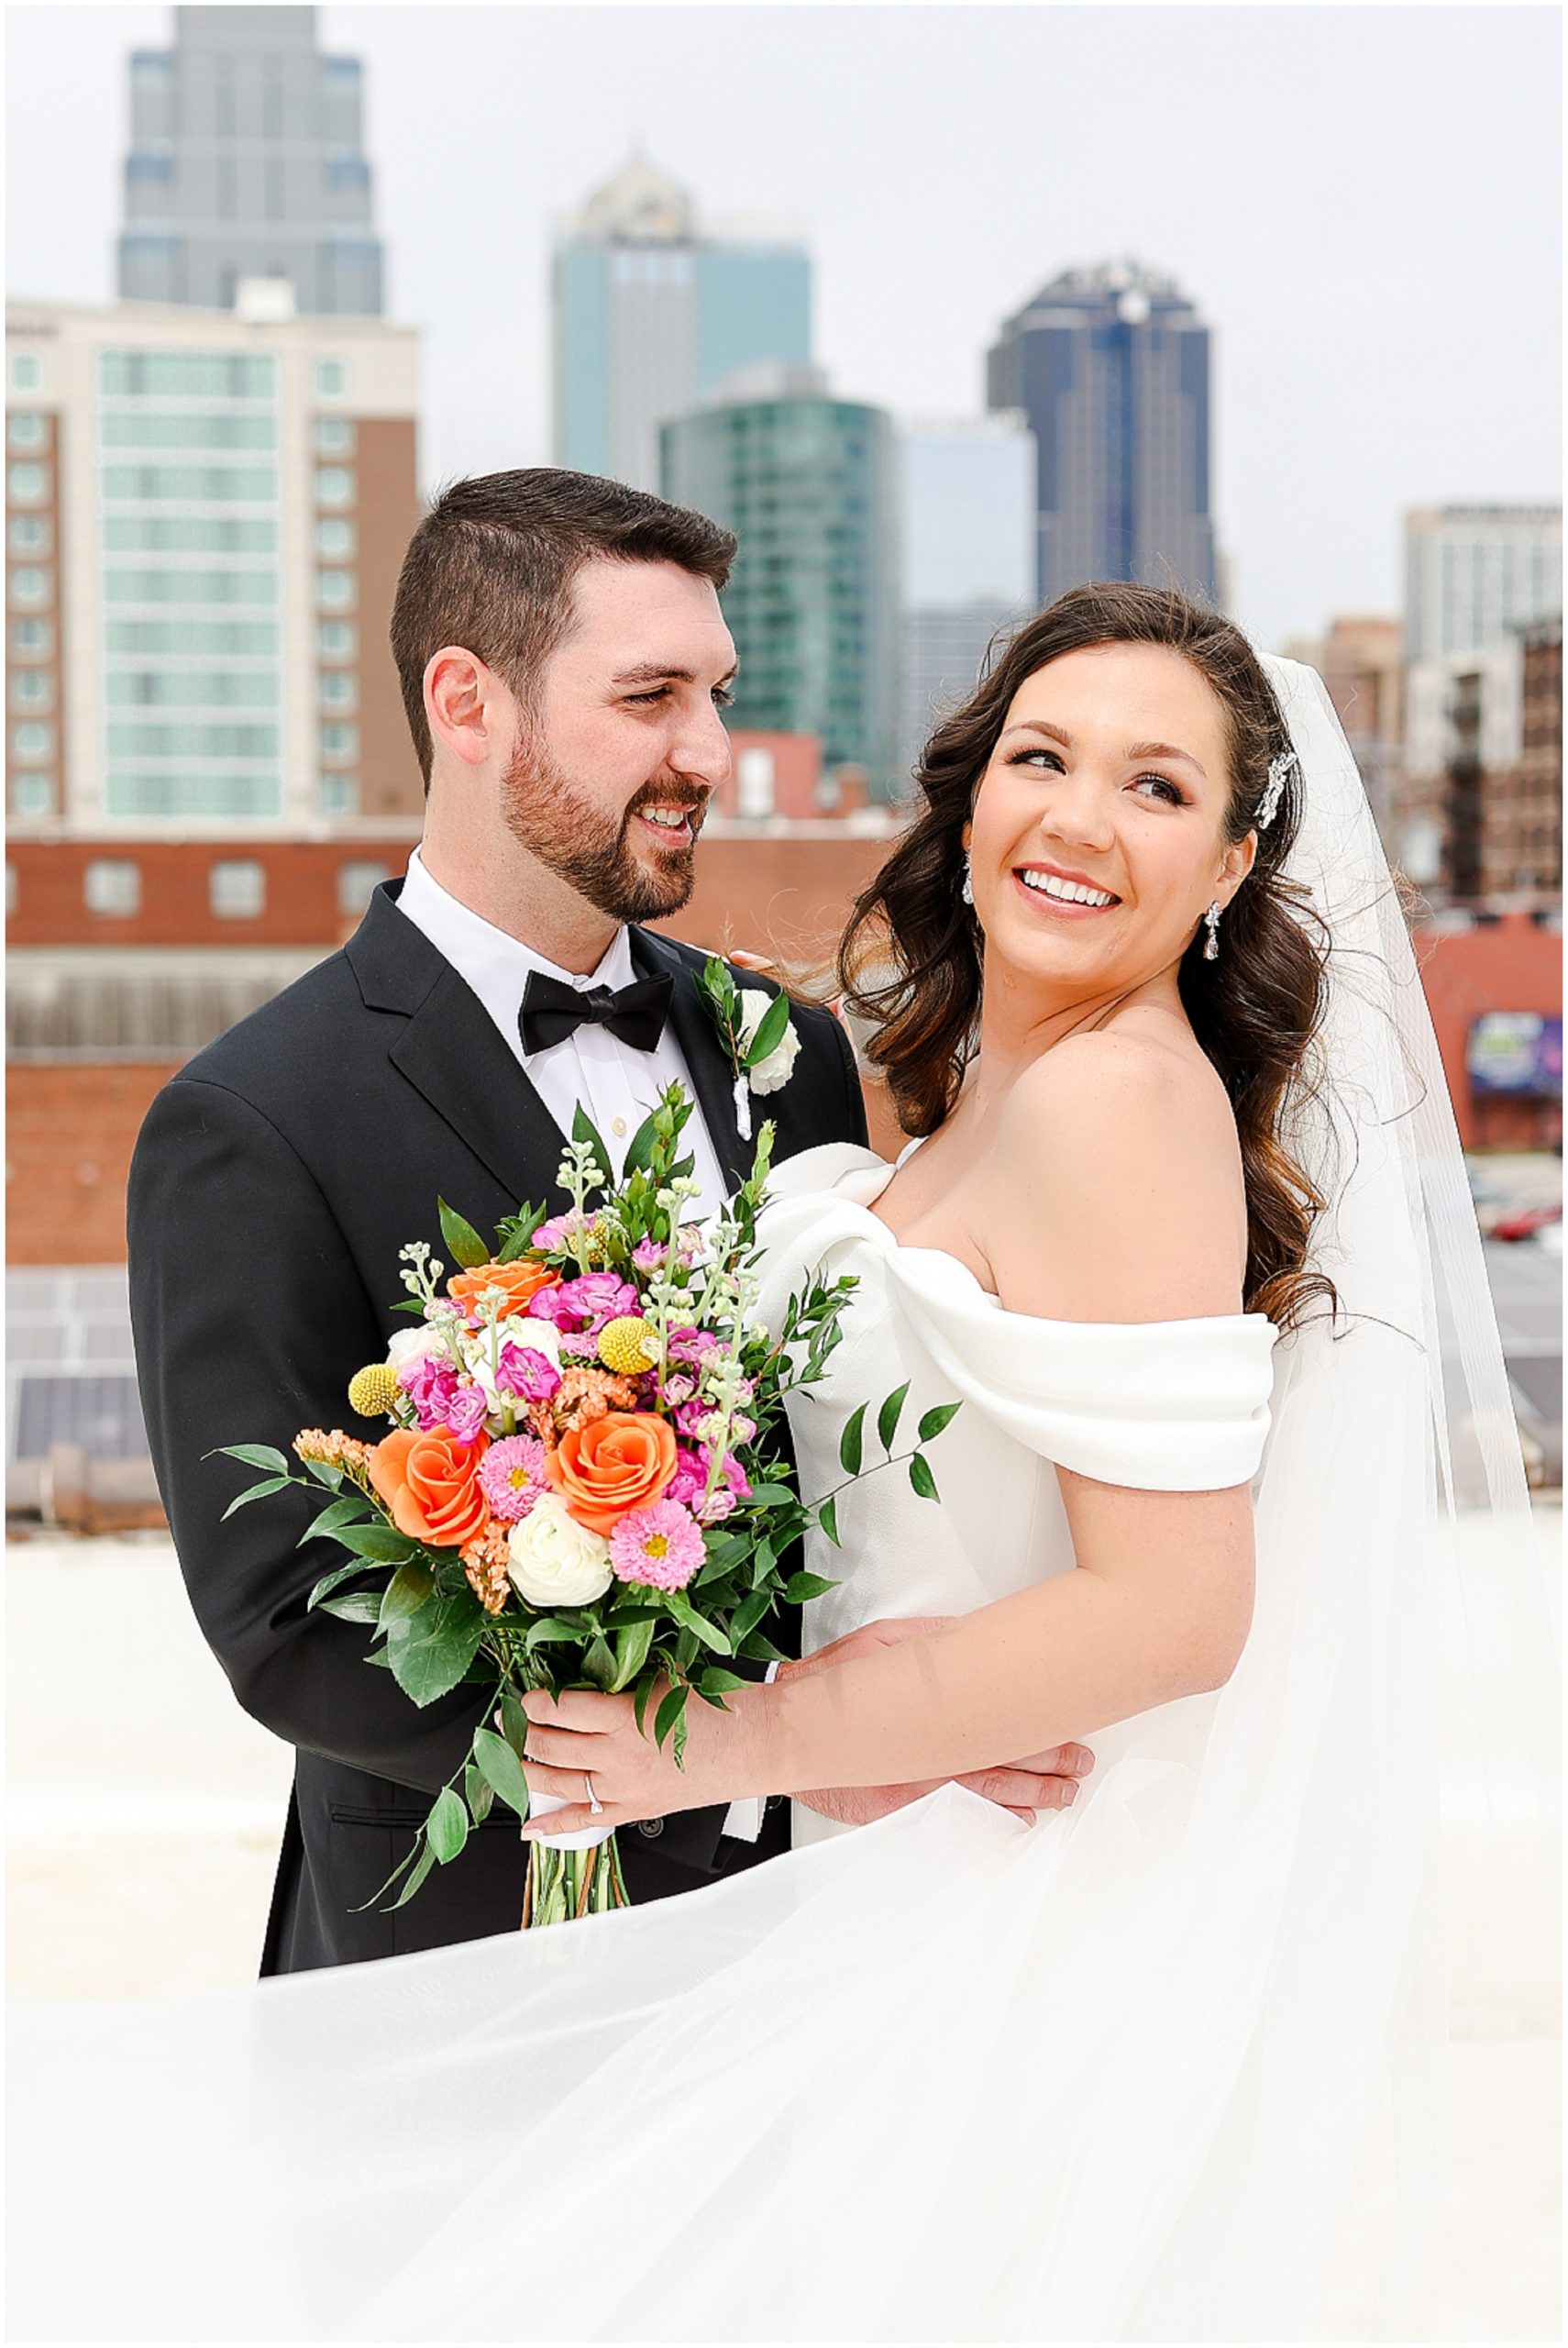 Kansas City Wedding Photographer - Best Wedding Photography - STL - Liberty Memorial - Overland Park - Wedding and Family Photos 